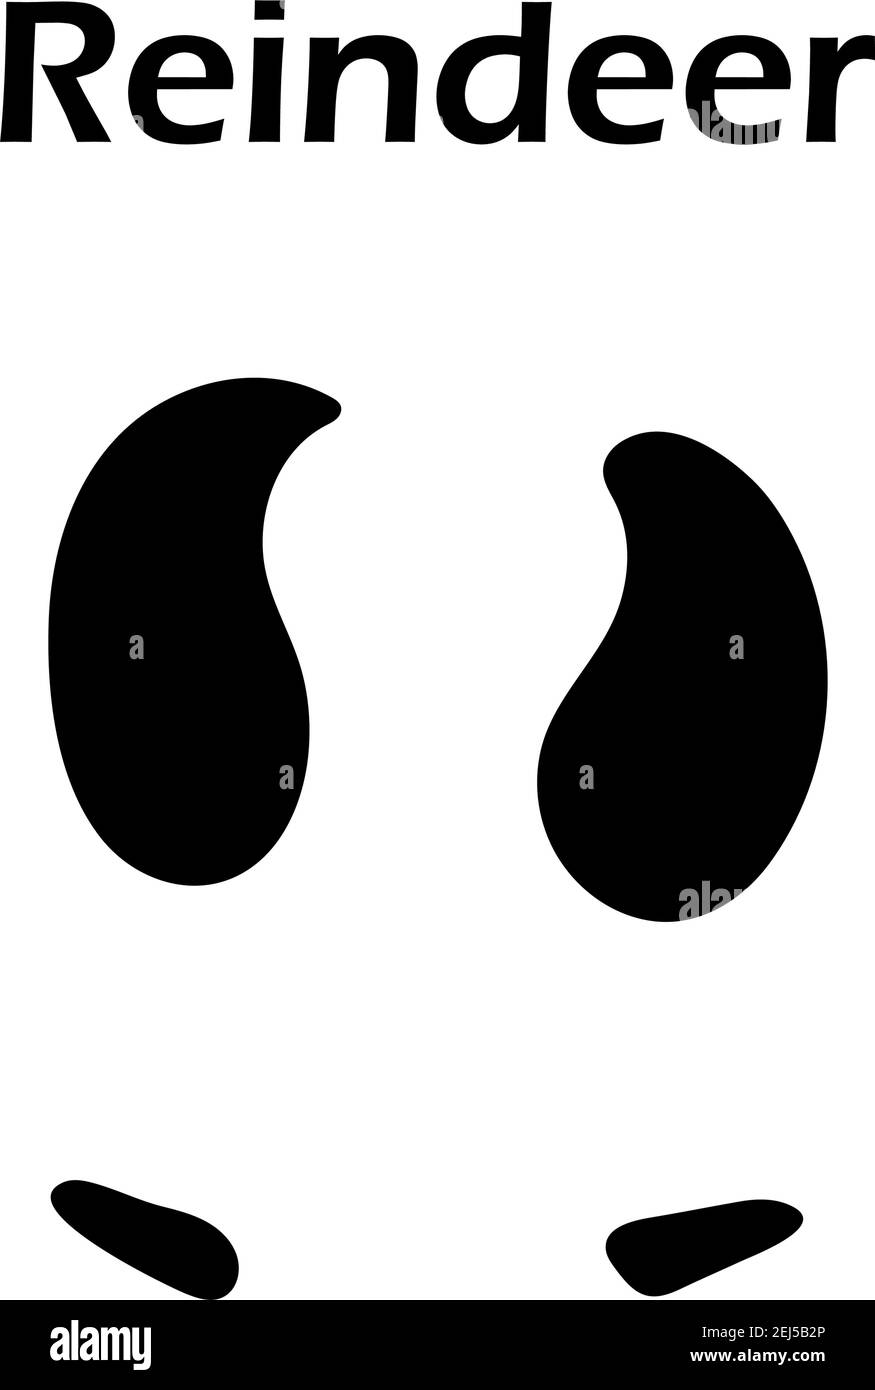 Reindeer Footprint. Black Silhouette Design. Vector Illustration. Stock Vector